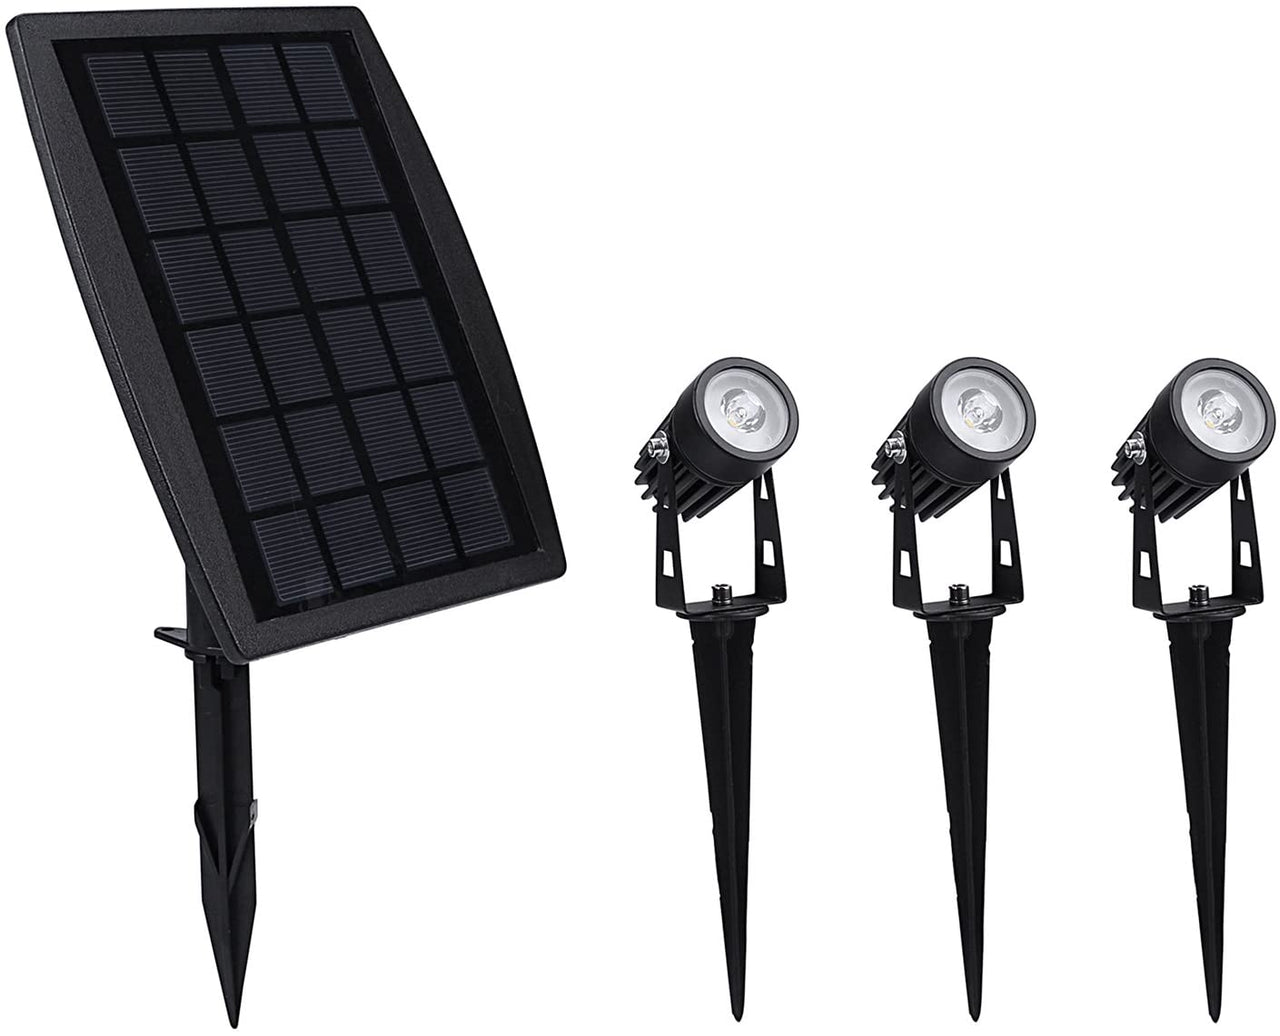 3 x LED Spotlights Powered Solar Garden Lights Outdoor Waterproof (Warm White) - Outdoor Immersion